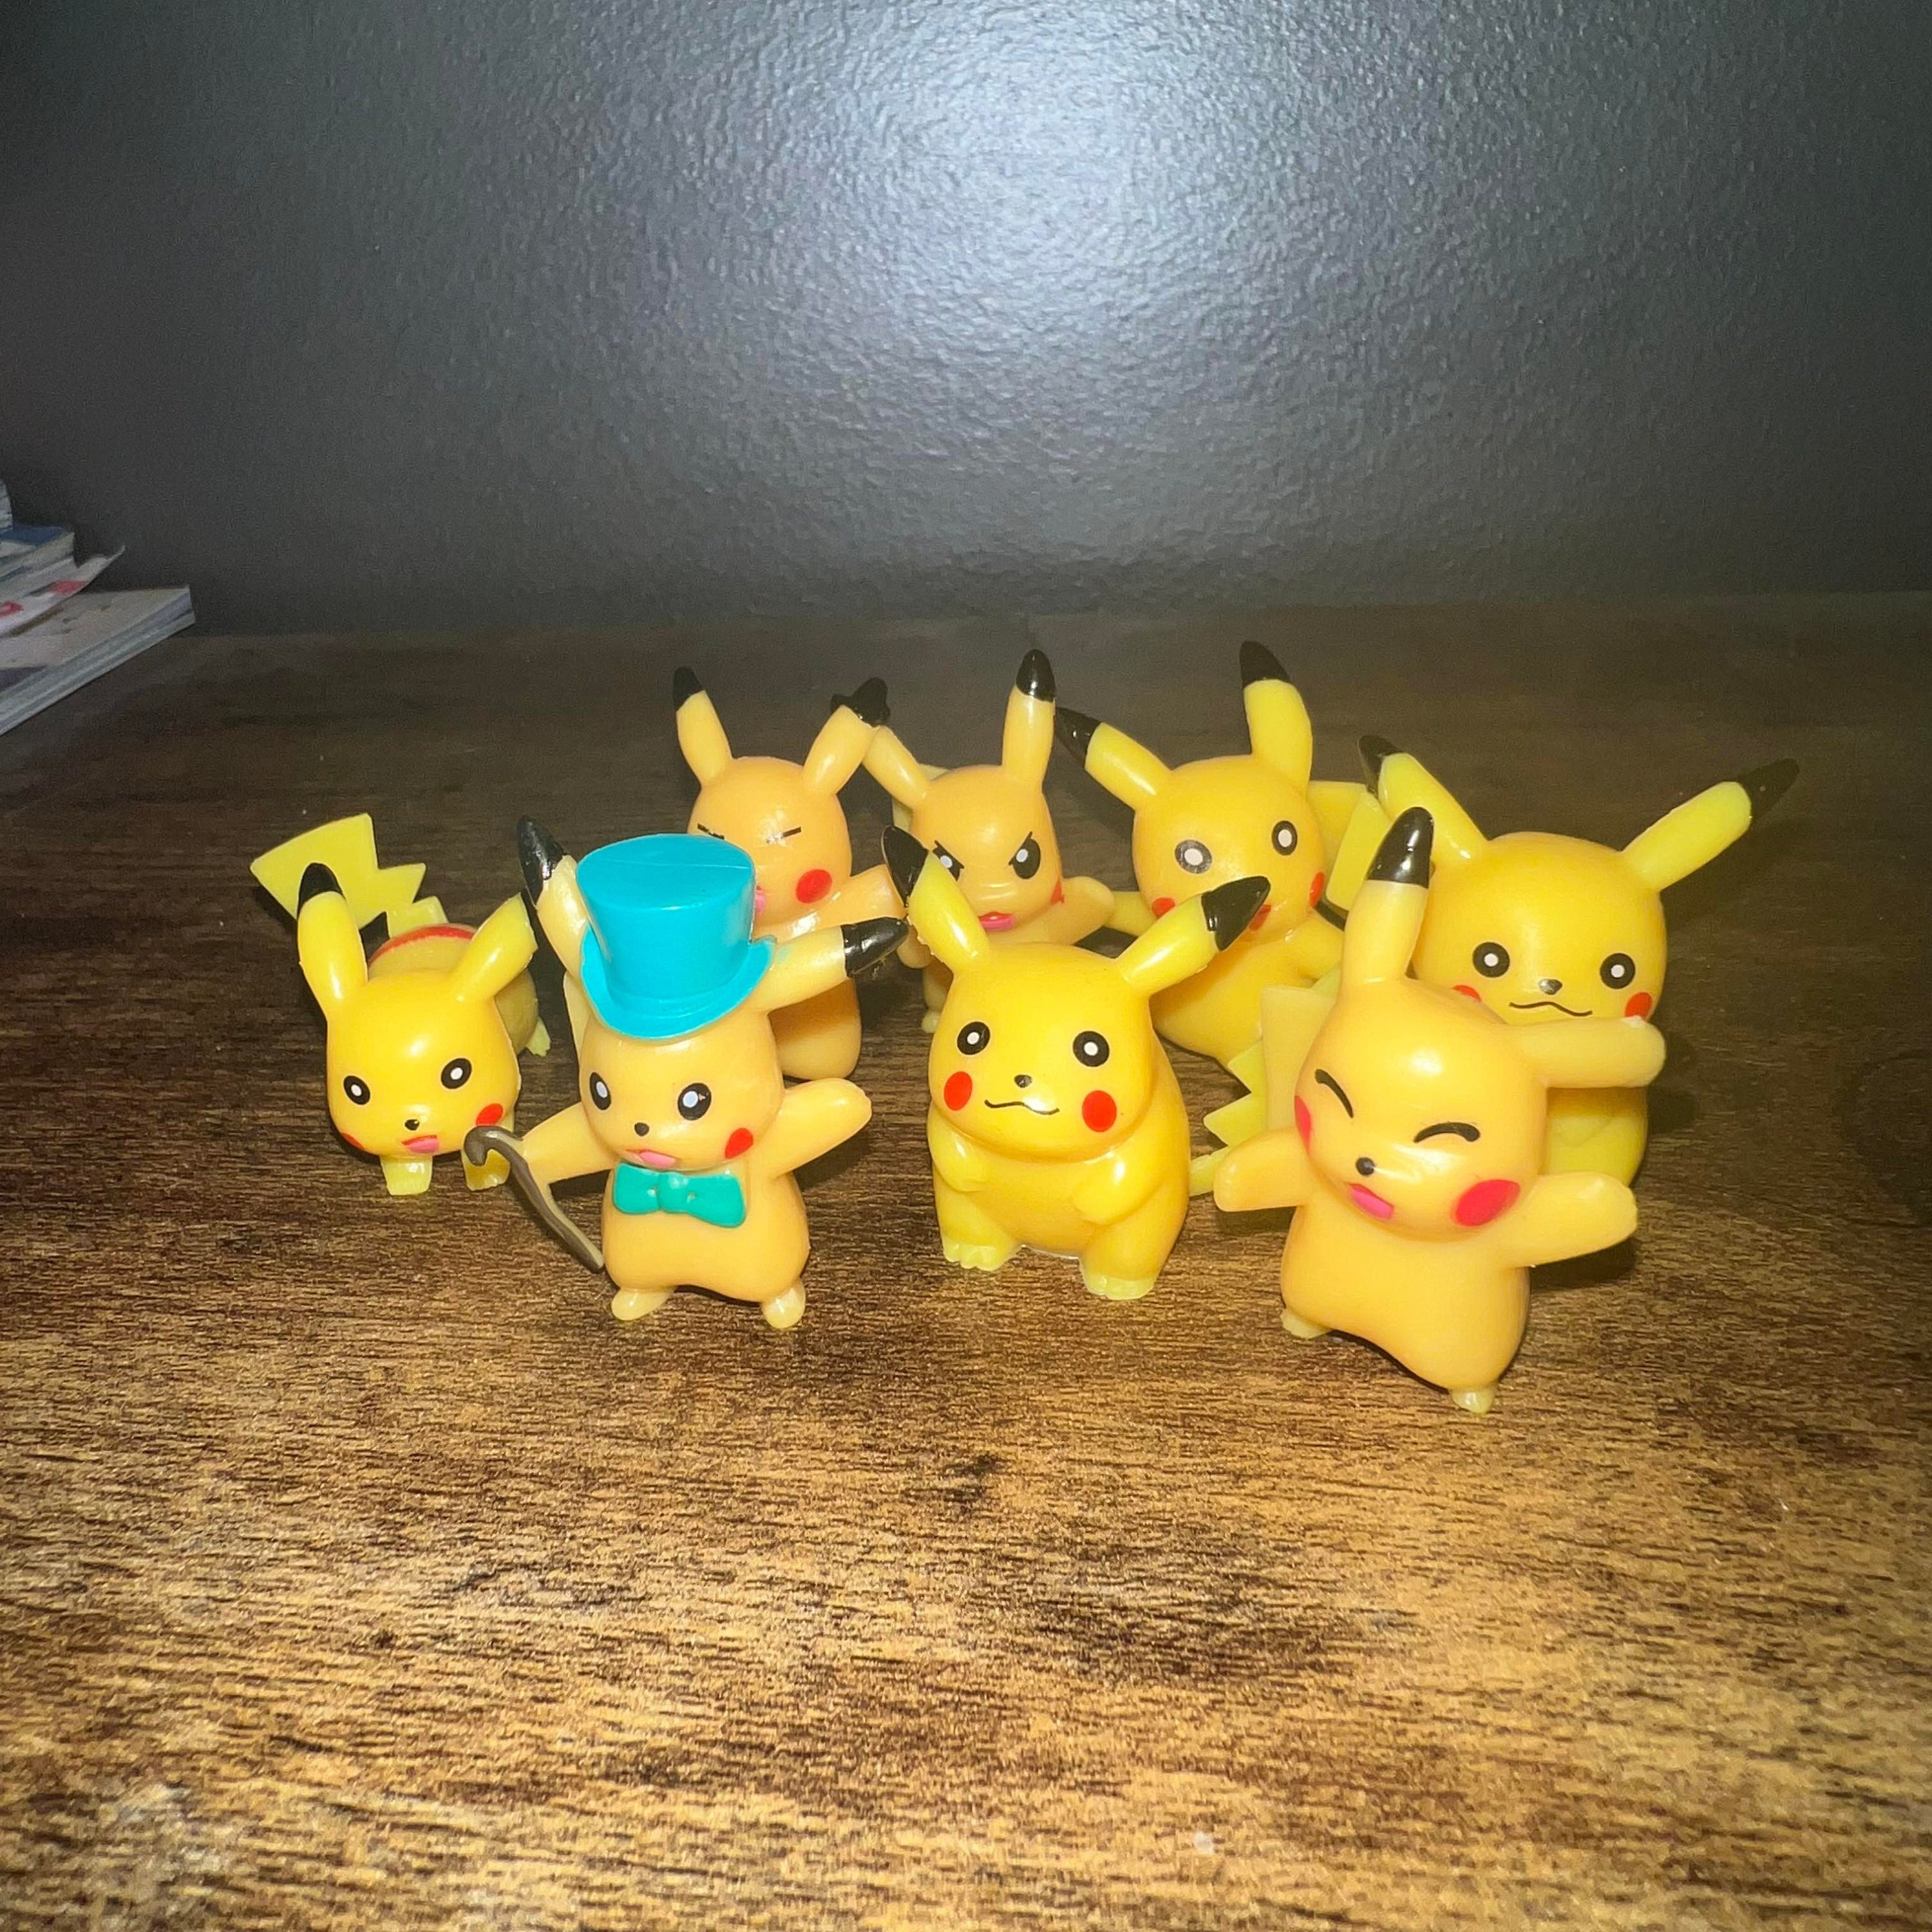 5 Pokemon Fanart Supreme Hypebeast Figurines- Pikachu Hoodie Figurine -  Pink, Blue, and Black-Pink - Figurines - Portland, Oregon, Facebook  Marketplace